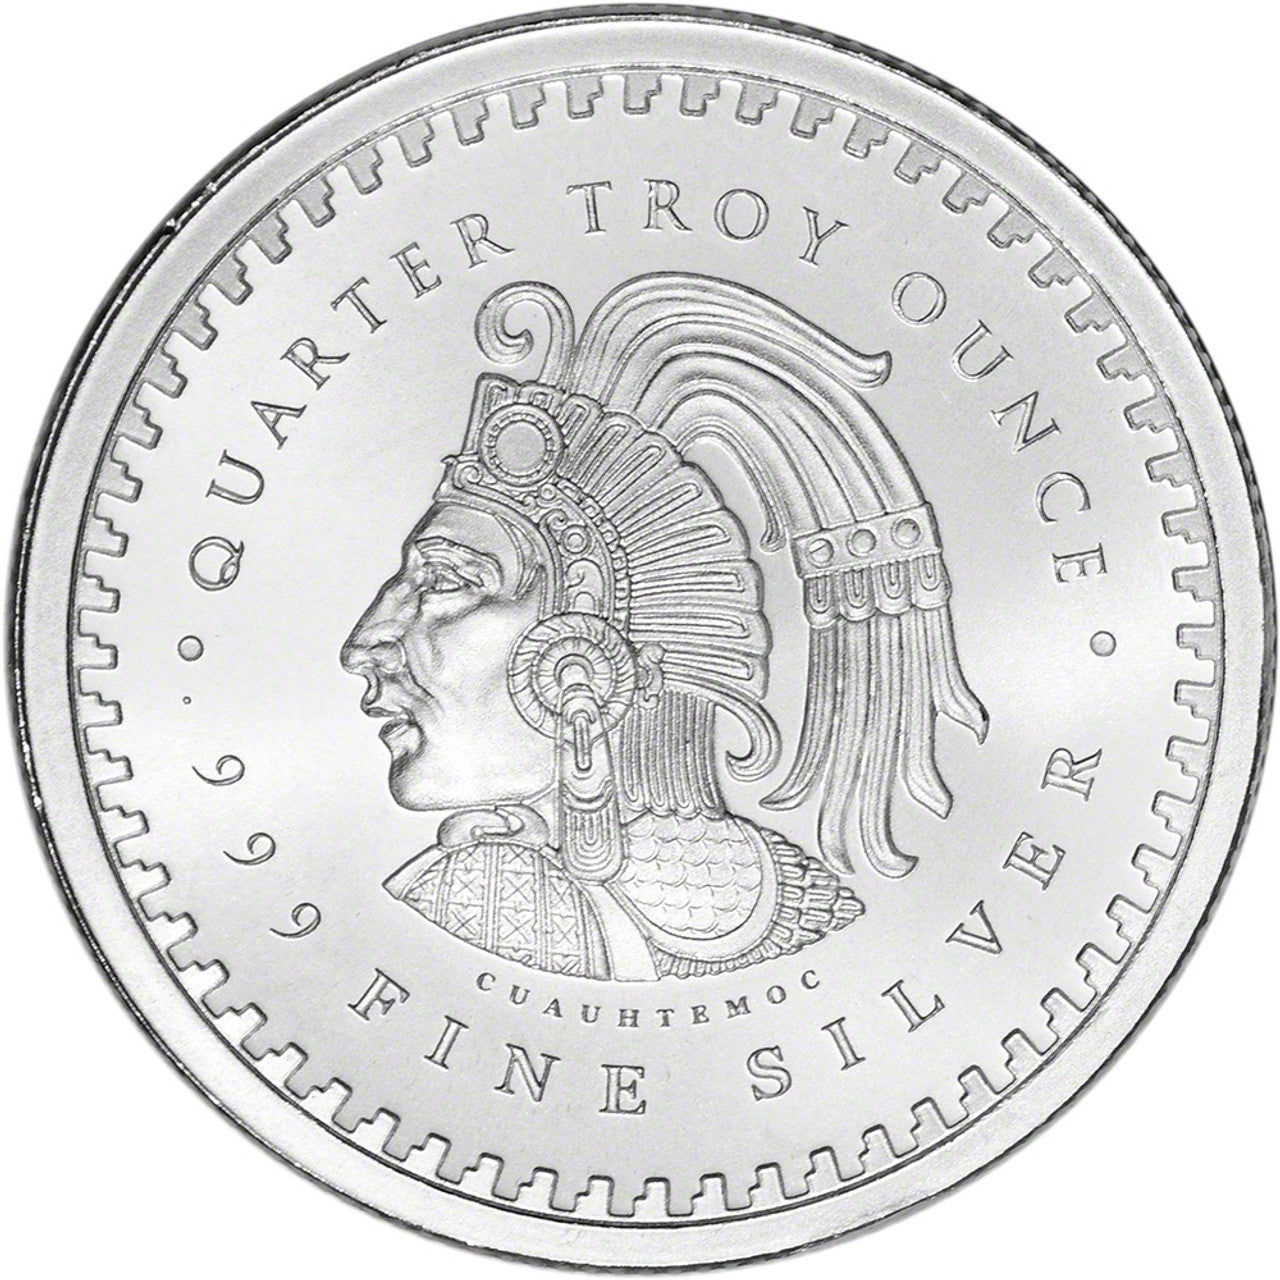 Pure Silver .999 Bullion - Mexico Aztec Calendar Mayan- 1/4 oz round coin